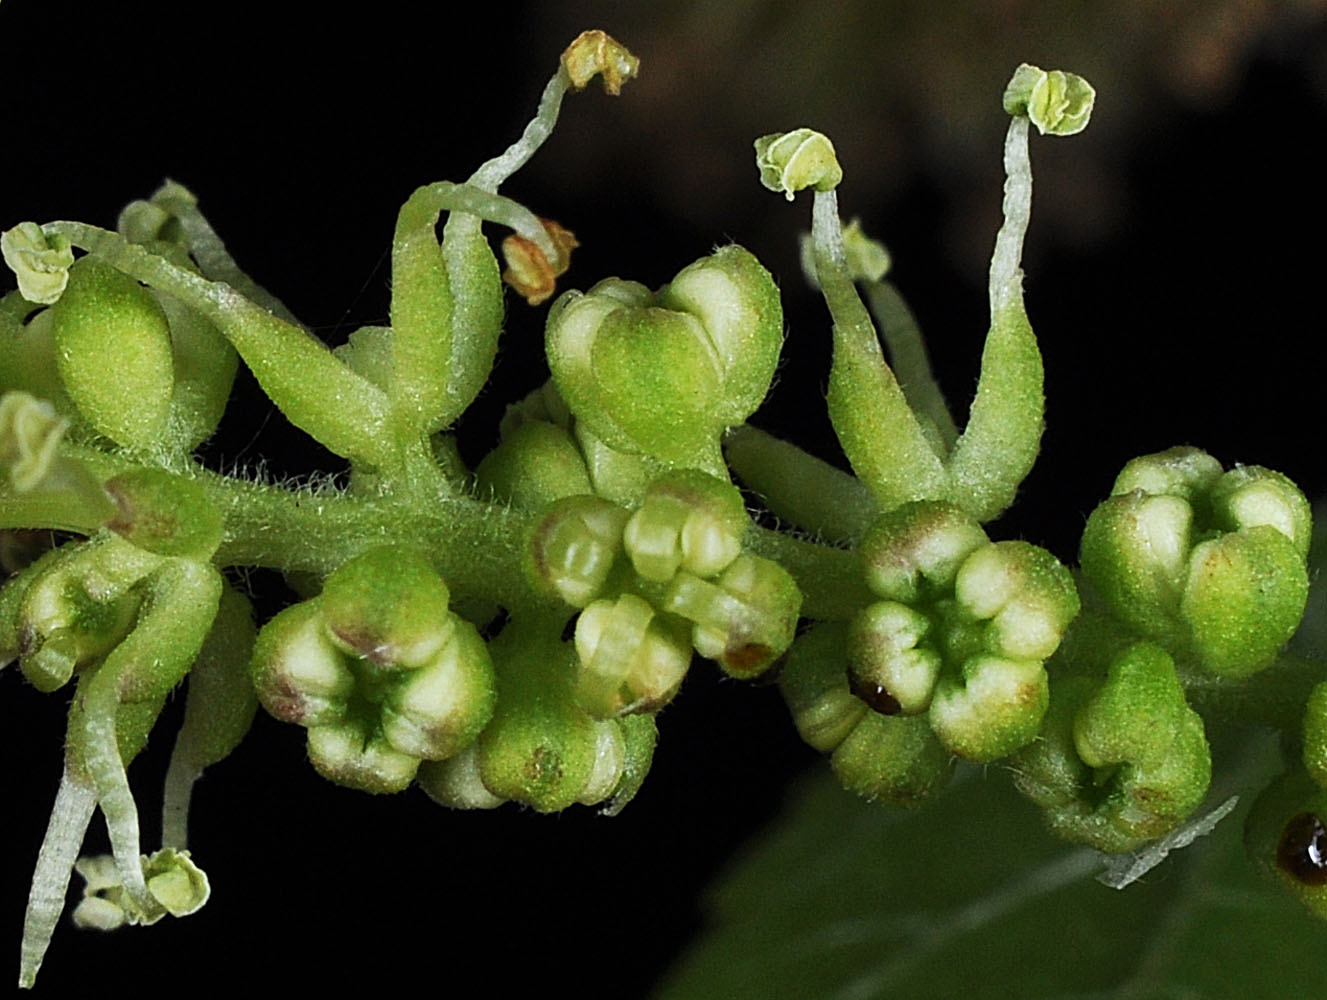 Flora of Eastern Washington Image: Morus alba